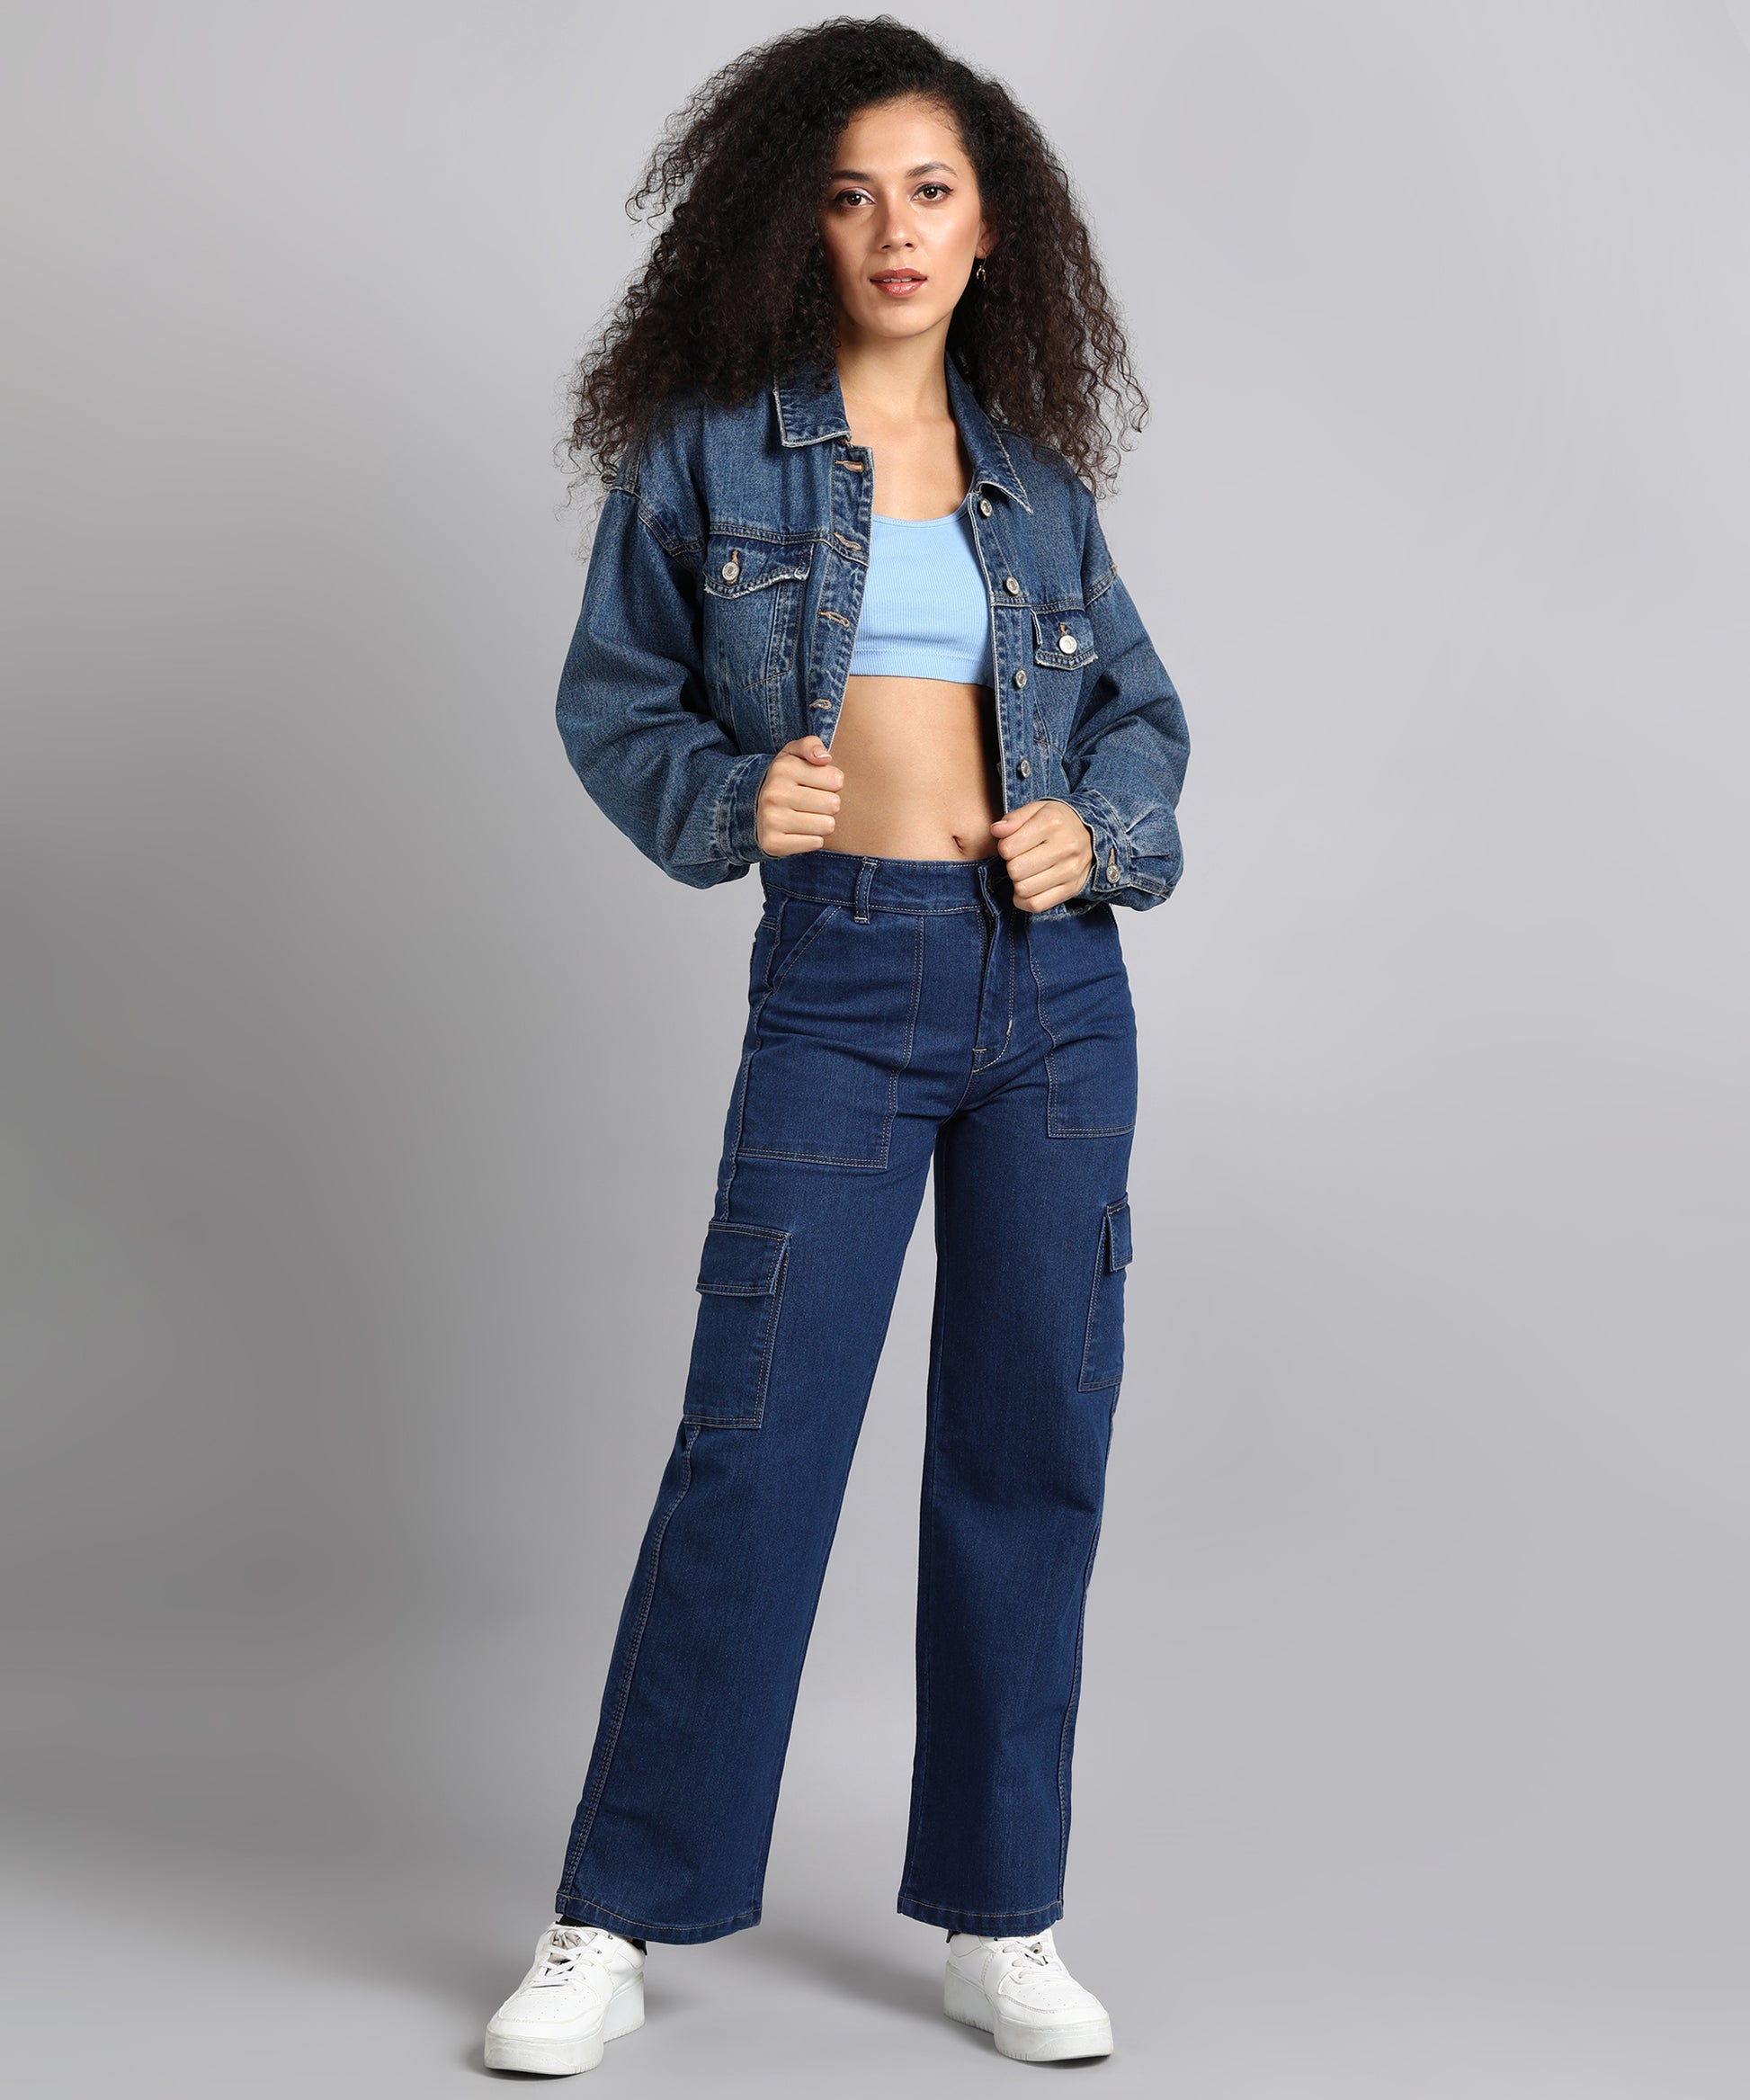 Petite Lily High Rise Cargo Jeans - Medium Blue Wash, Fashion Nova, Jeans